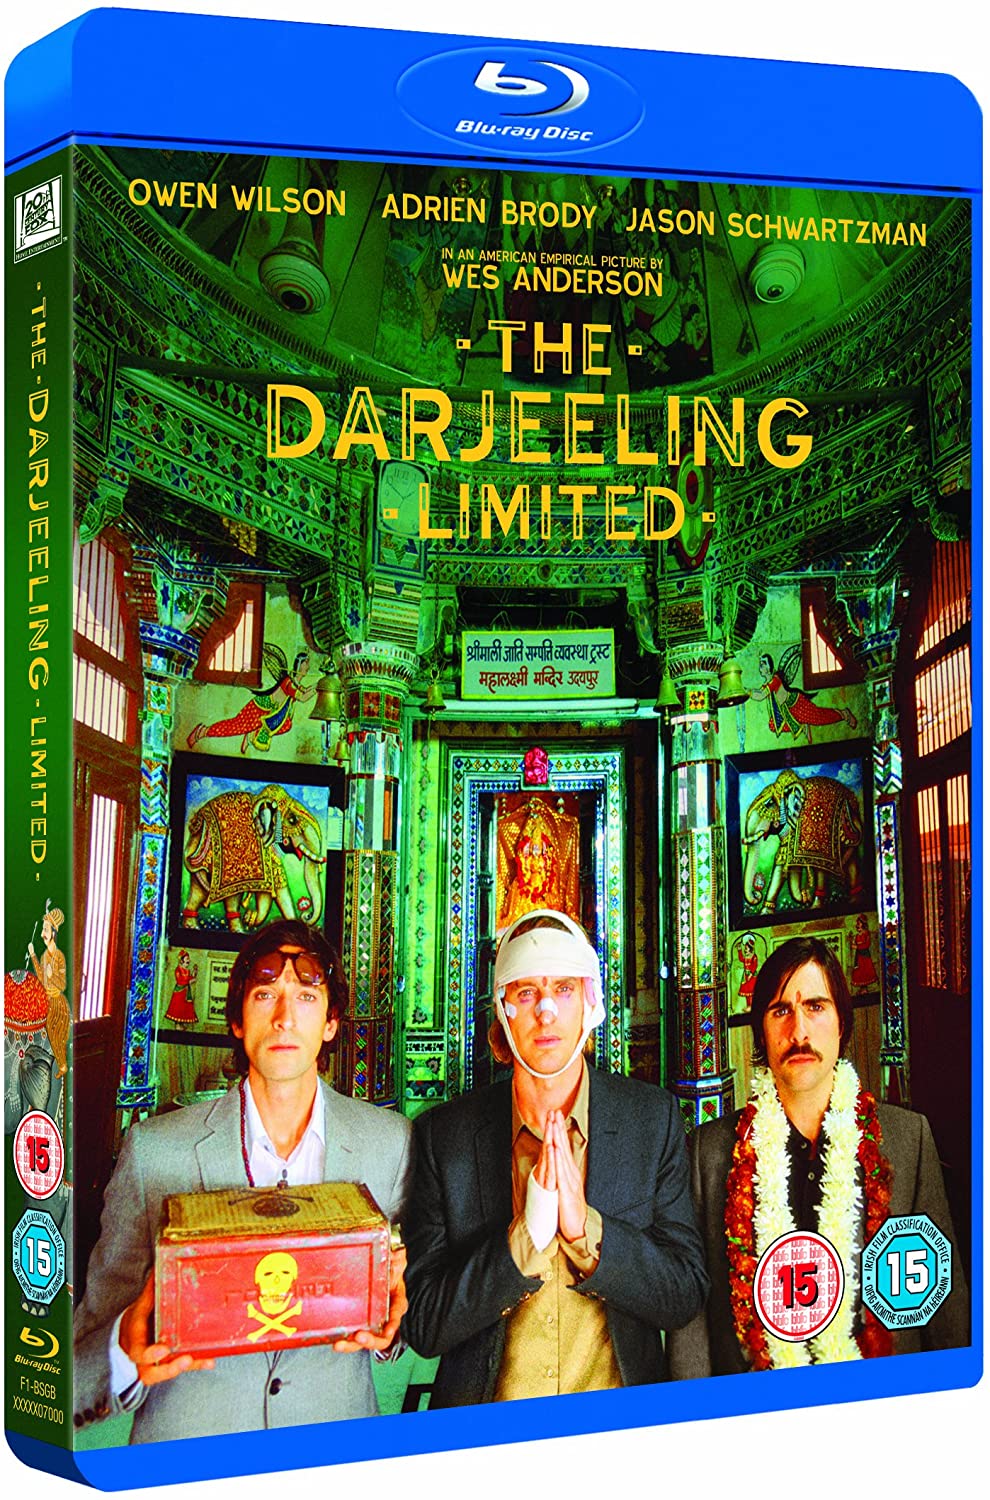 Darjeeling Limited The BD [2014] [Region Free] – Abenteuer [Blu-Ray]